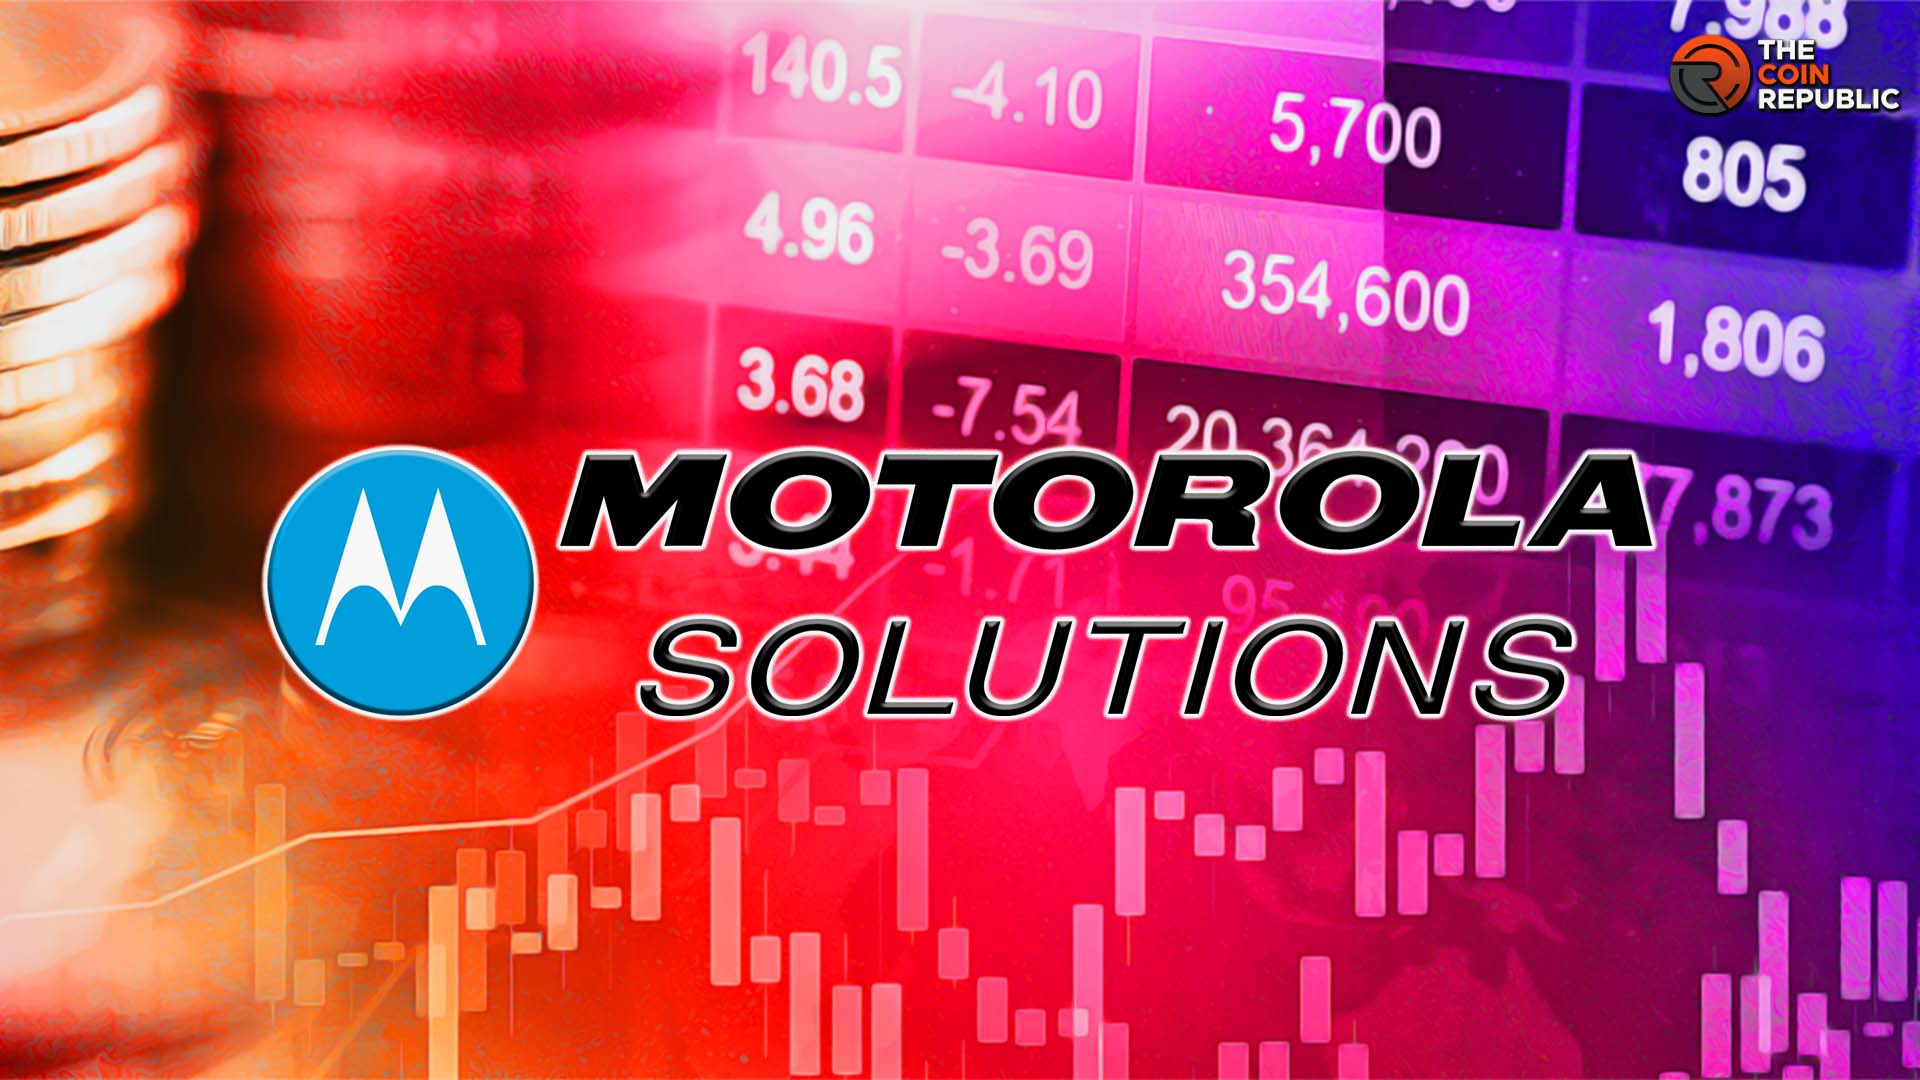 Motorola Solutions Inc. (MSI Stock) – Won $316 Million Award